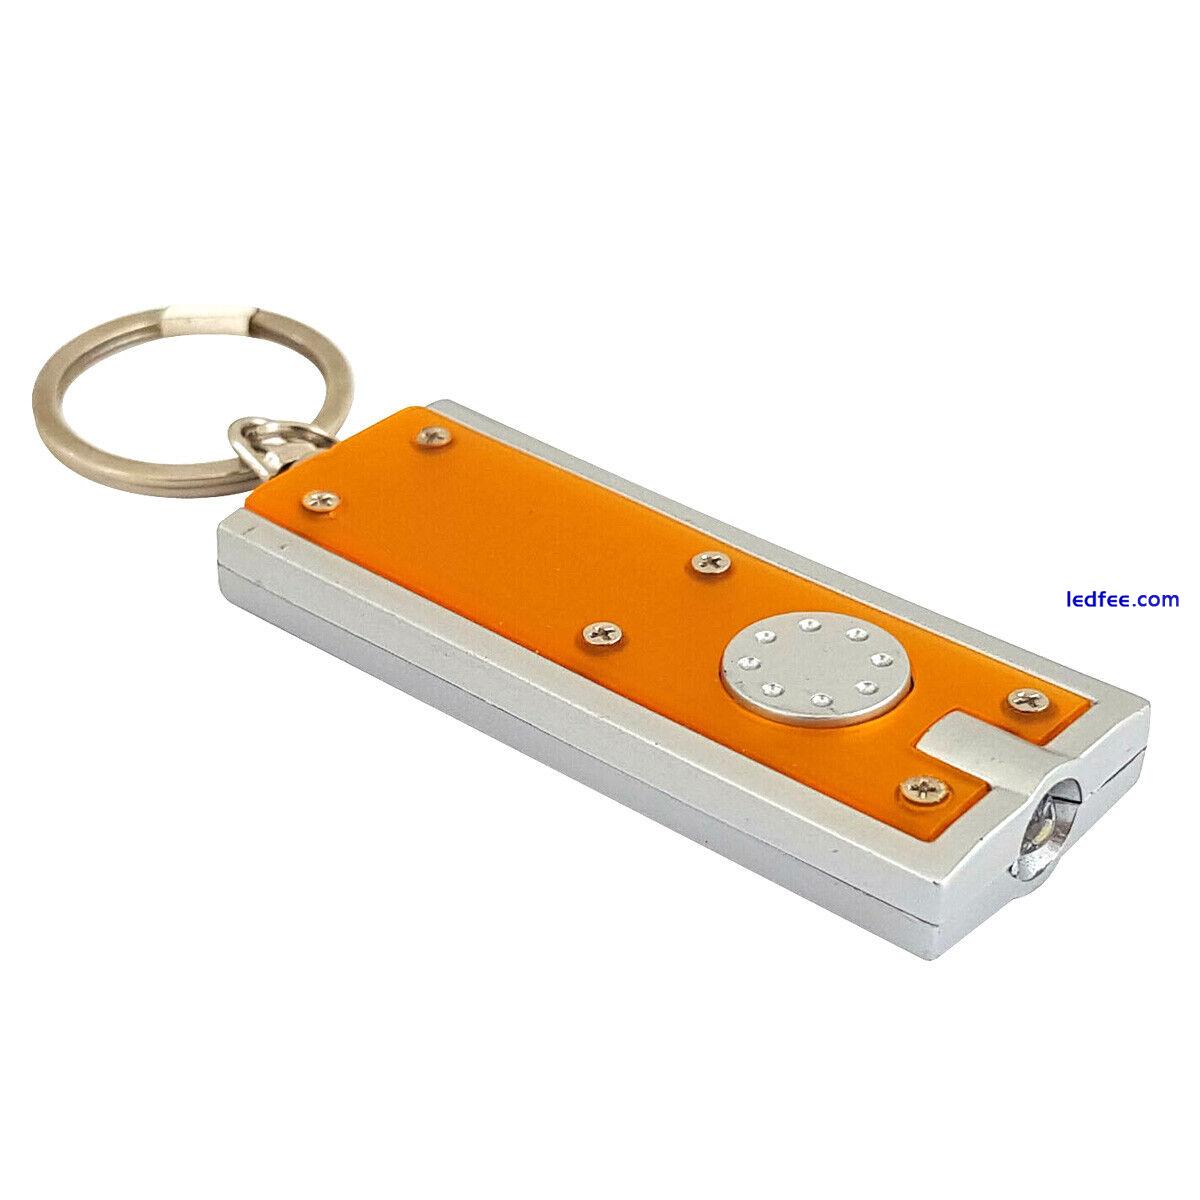 2x LED Keyring Torch Superbright Mini Handbag Pocket Keychain Flashlight Camping 3 